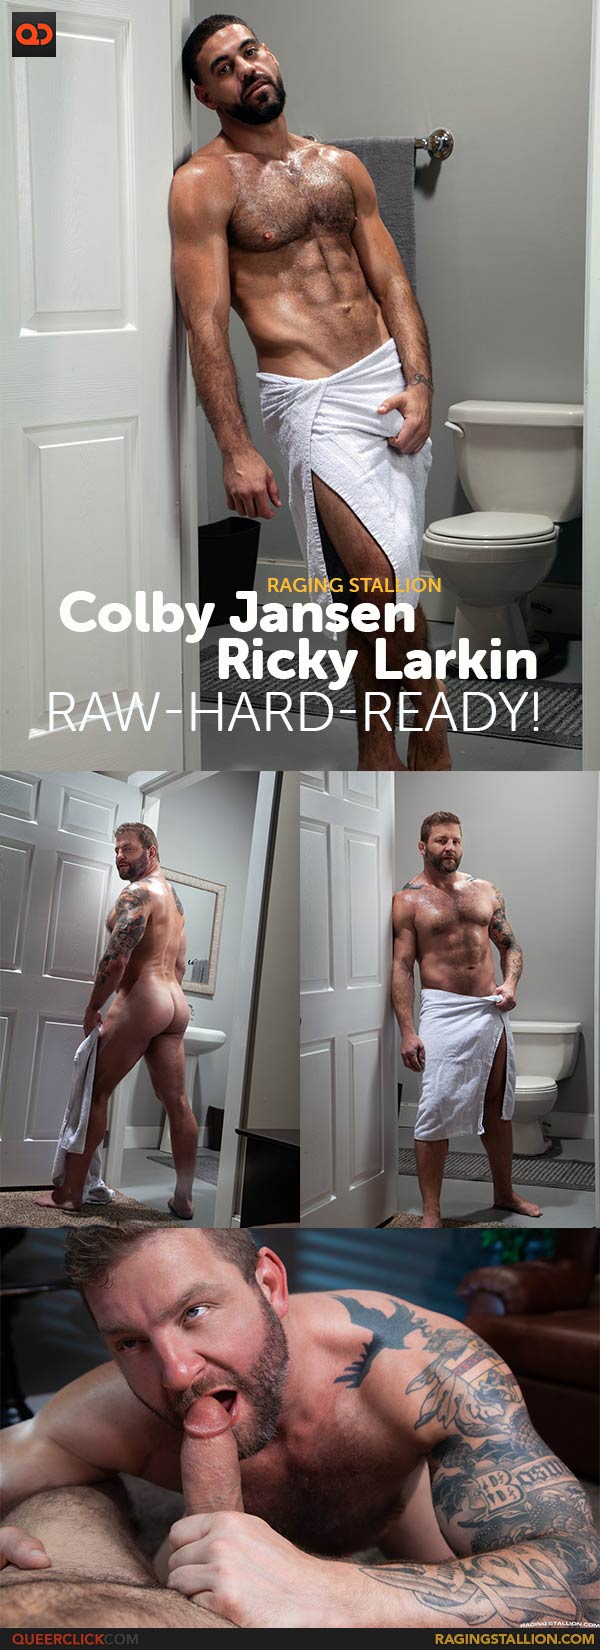 Raging Stallion: Ricky Larkin and Colby Jansen - Raw Hard and Ready!